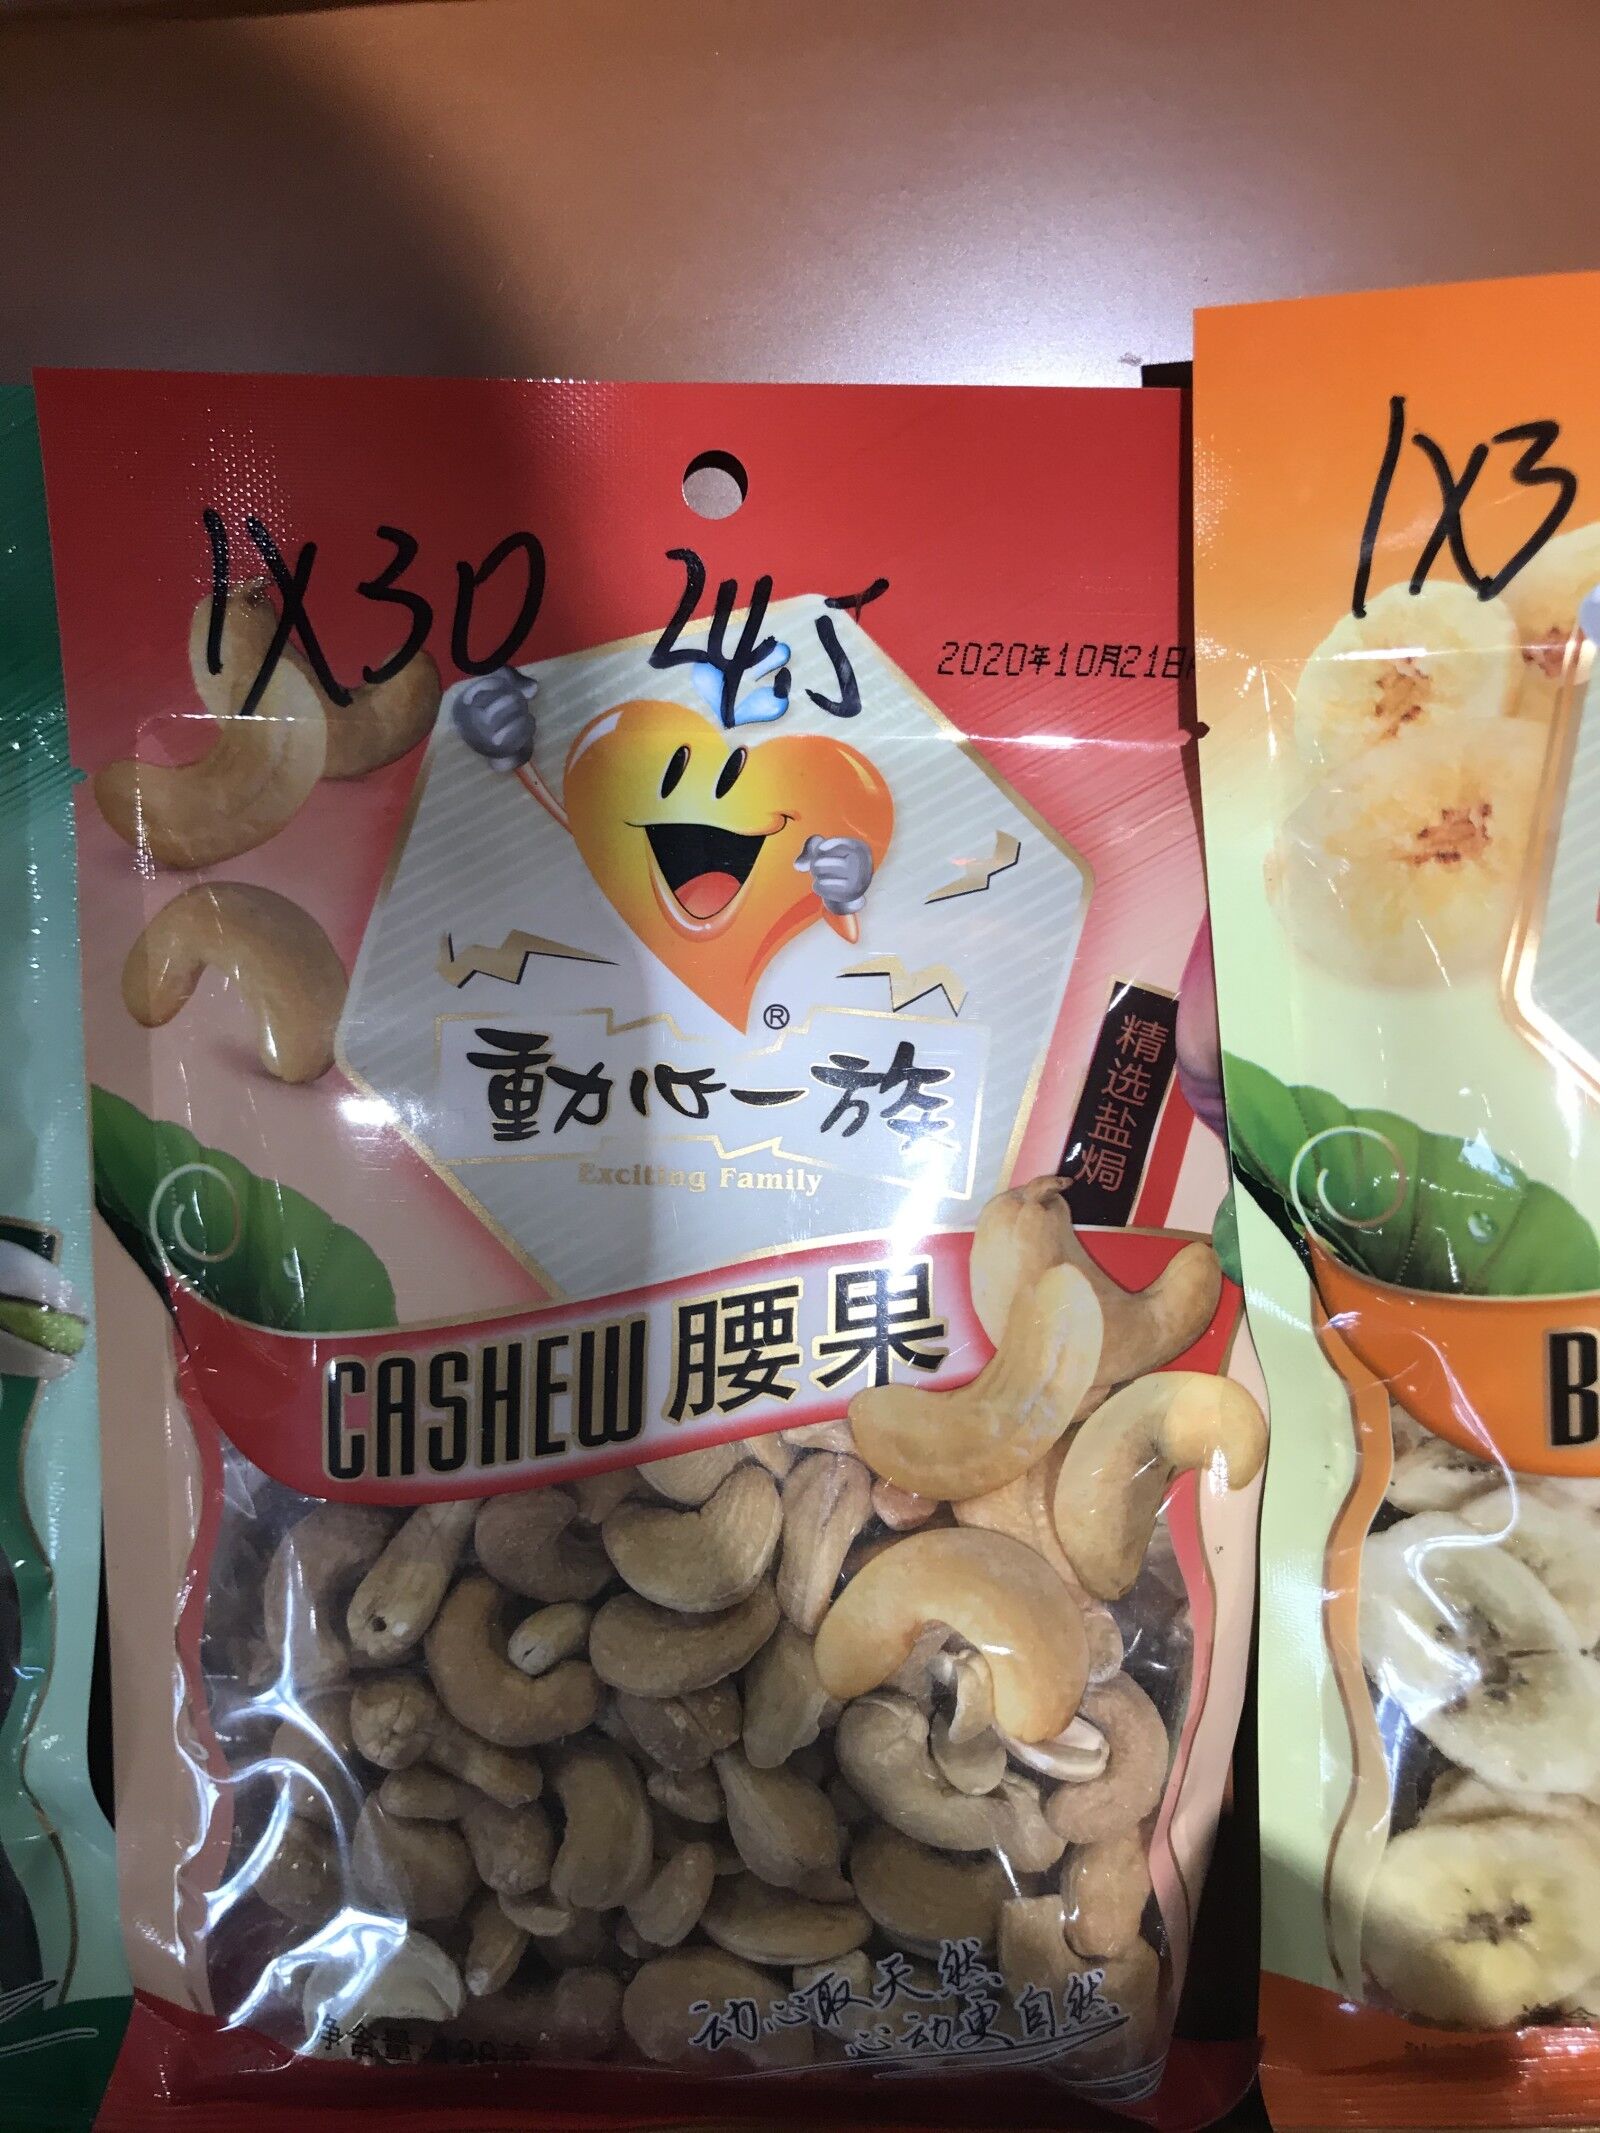 034 nuts: Cashew